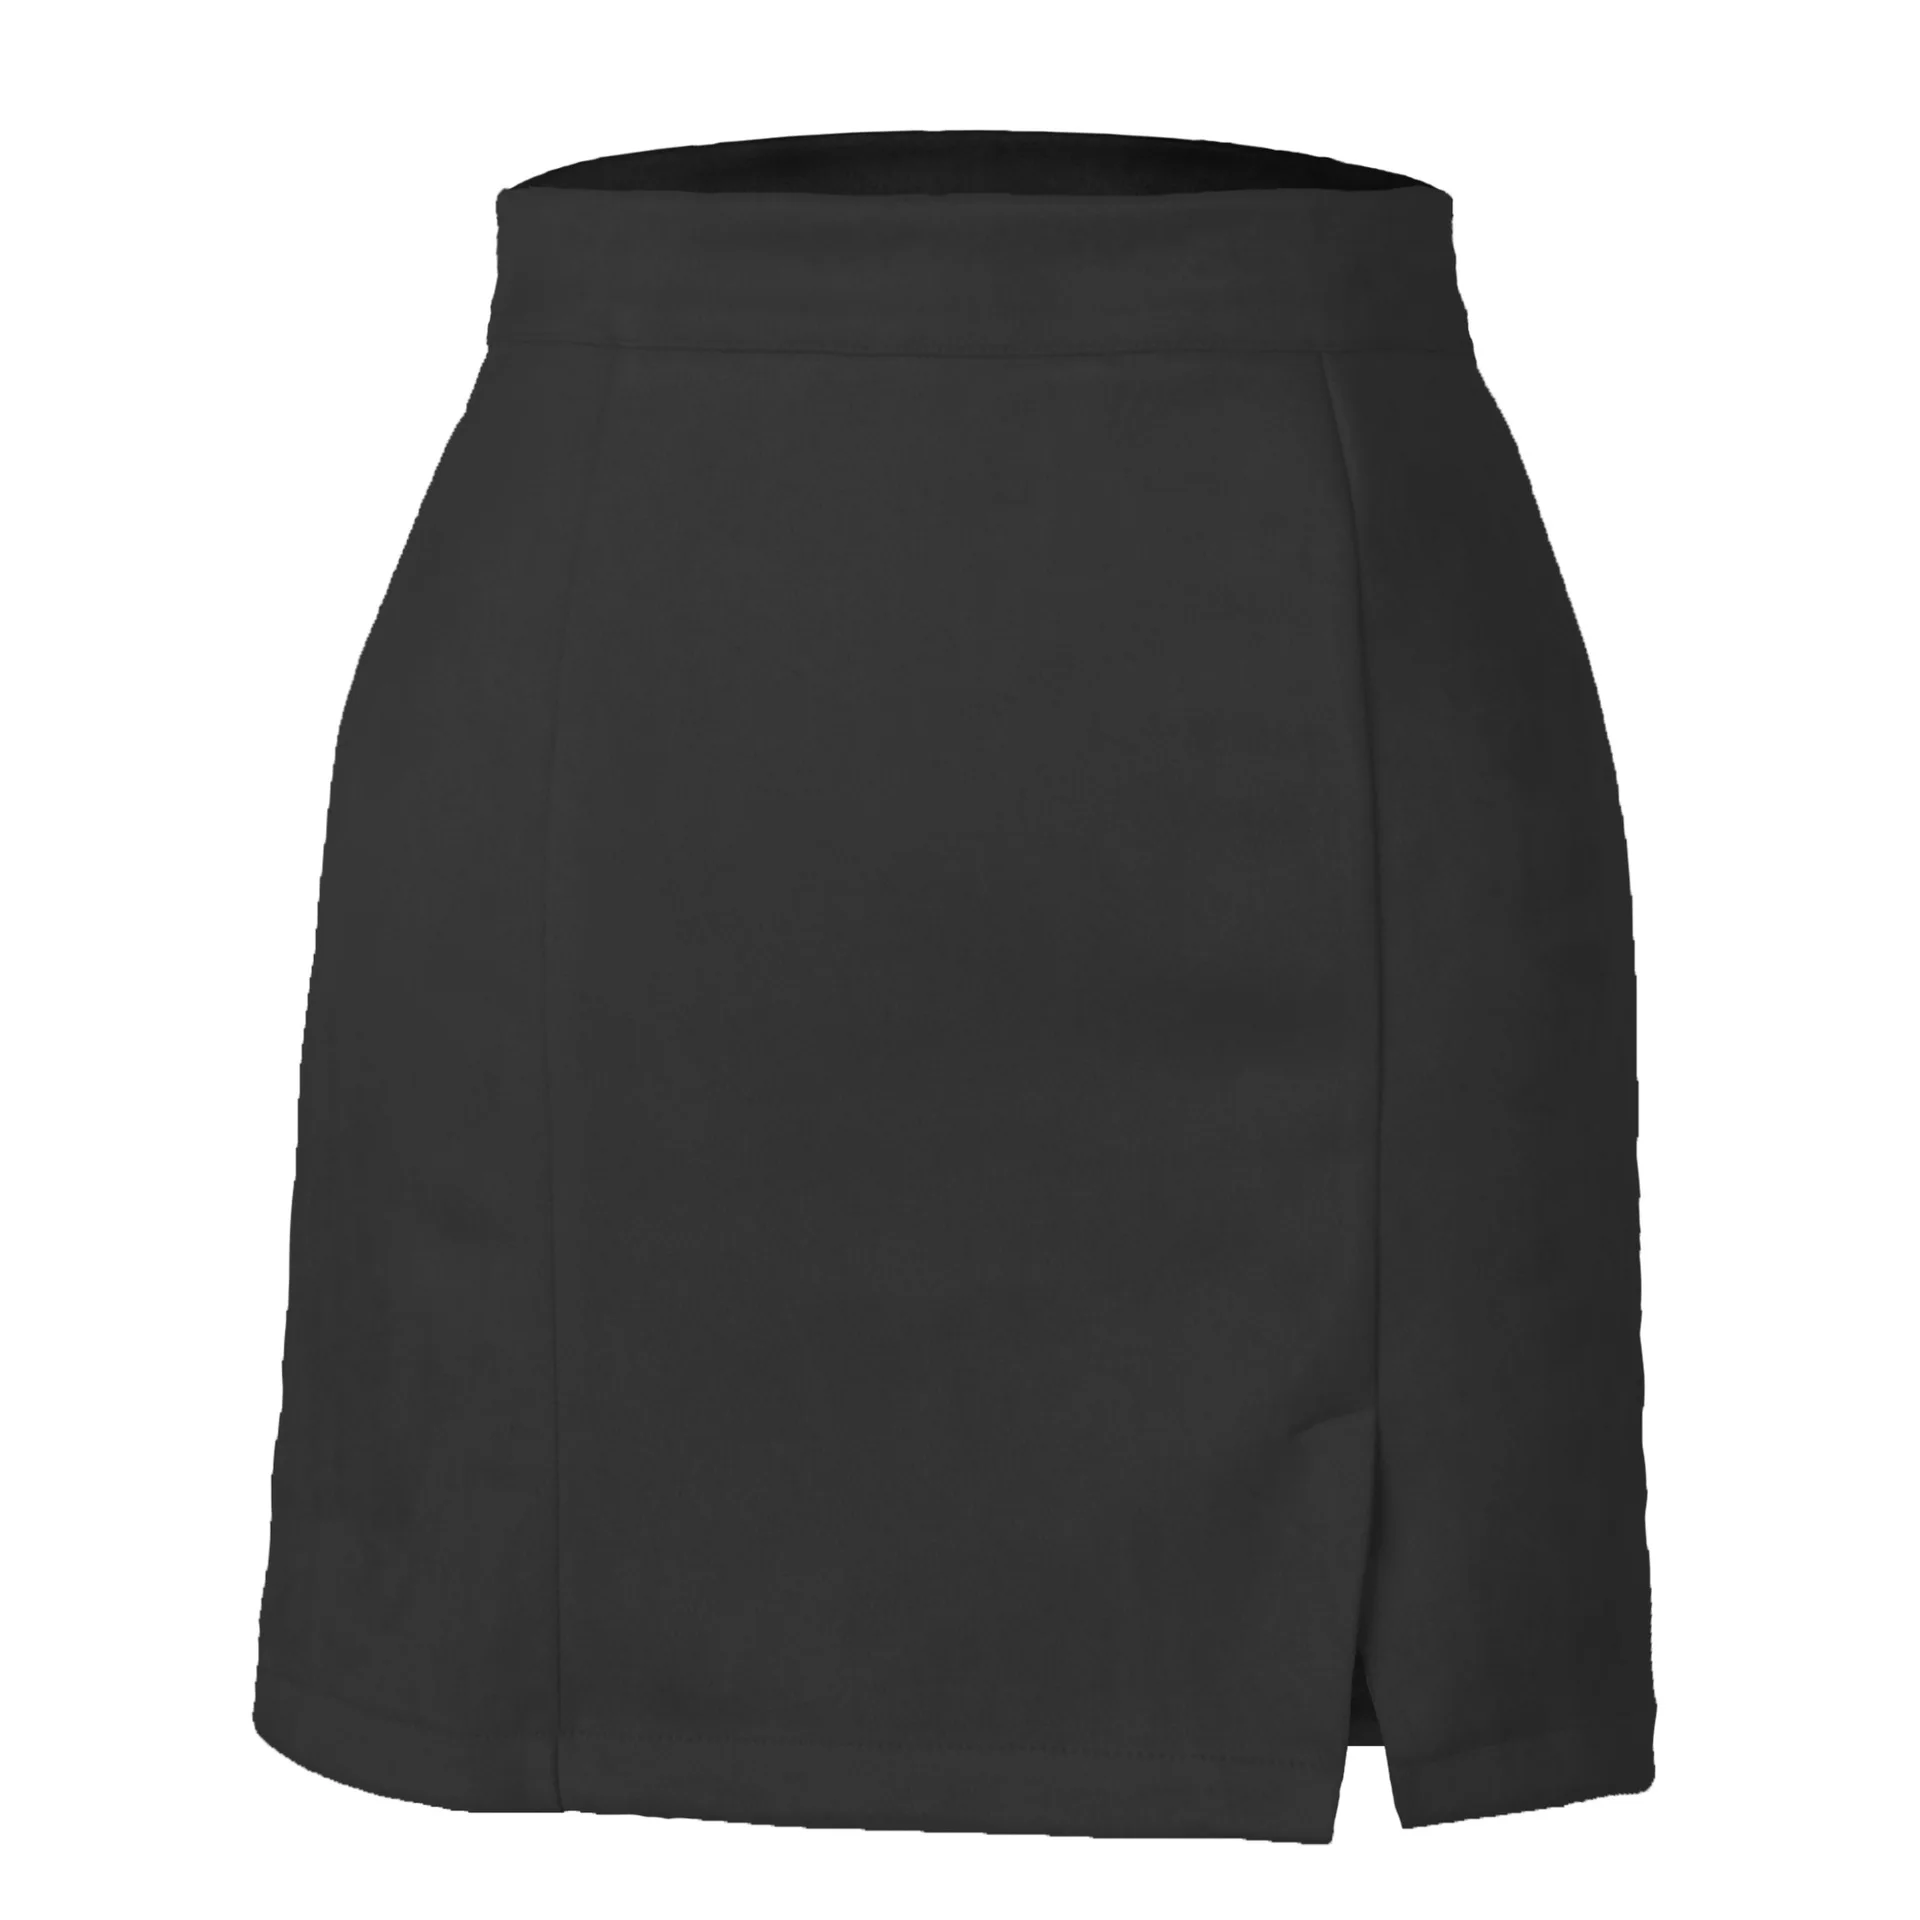 Sexy Suede Soild A-LINE Short Pencil Mini Skirt Women 2021 Fashion Elastic High Waist Office Lady Bodycon Leopard Skirts Saias blue skirt